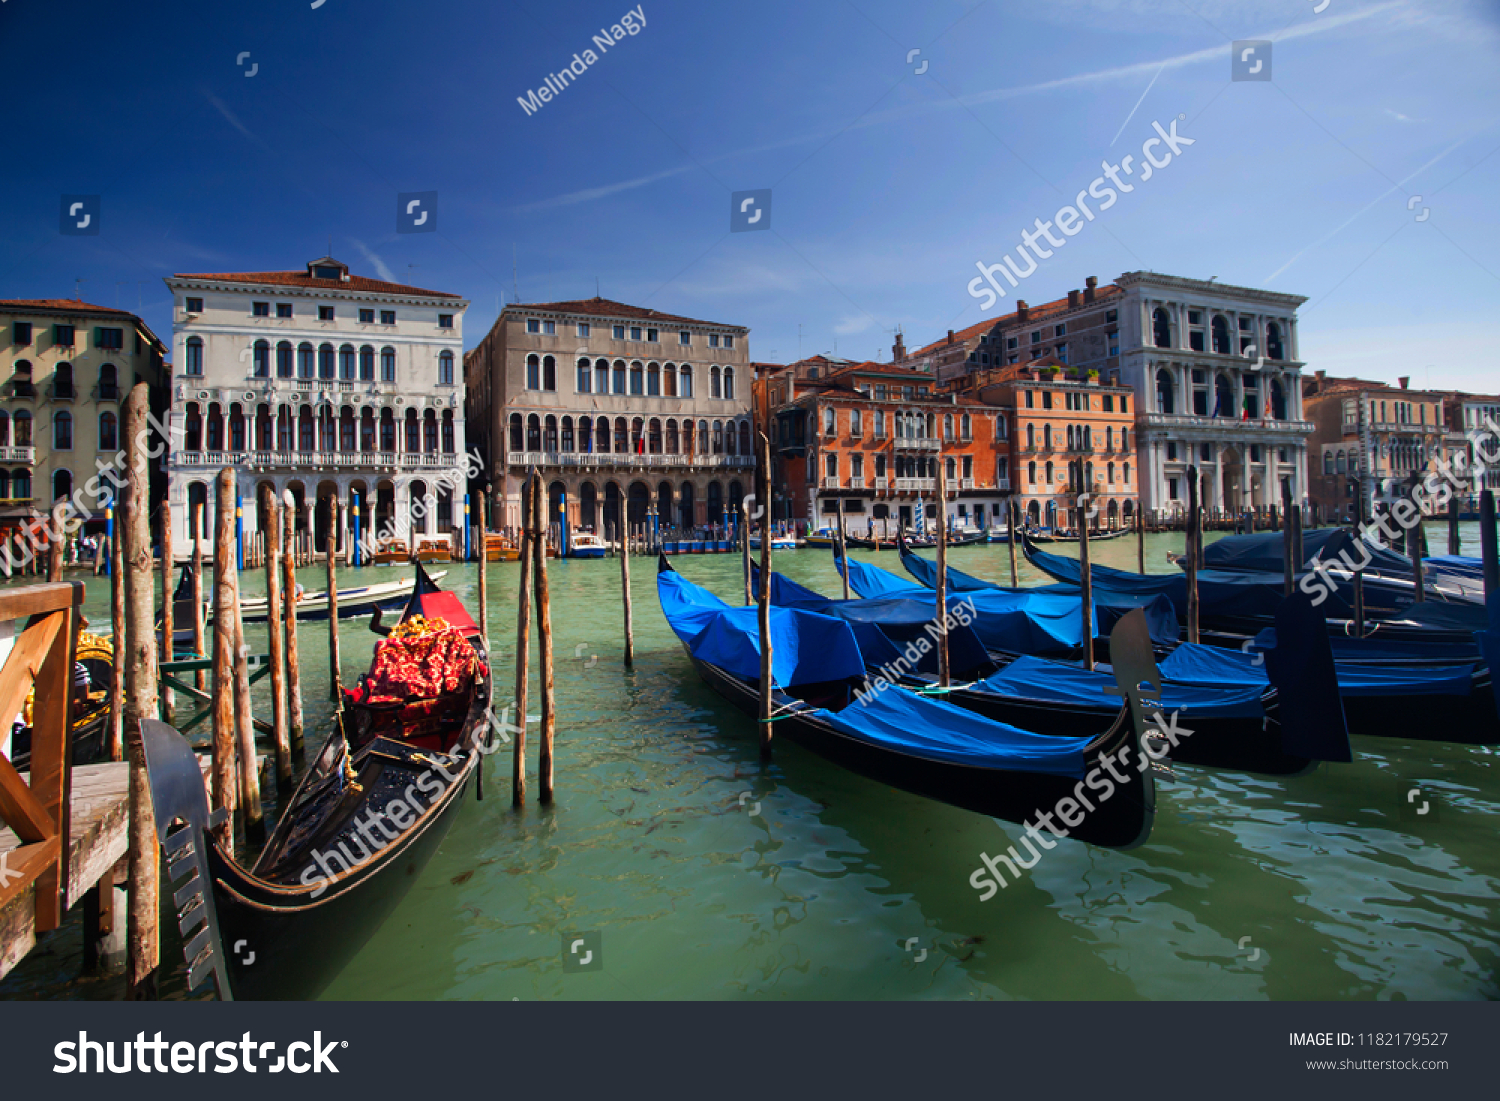 Gondolas pier row anchored on Canal Grande, Venice, Italy #1182179527